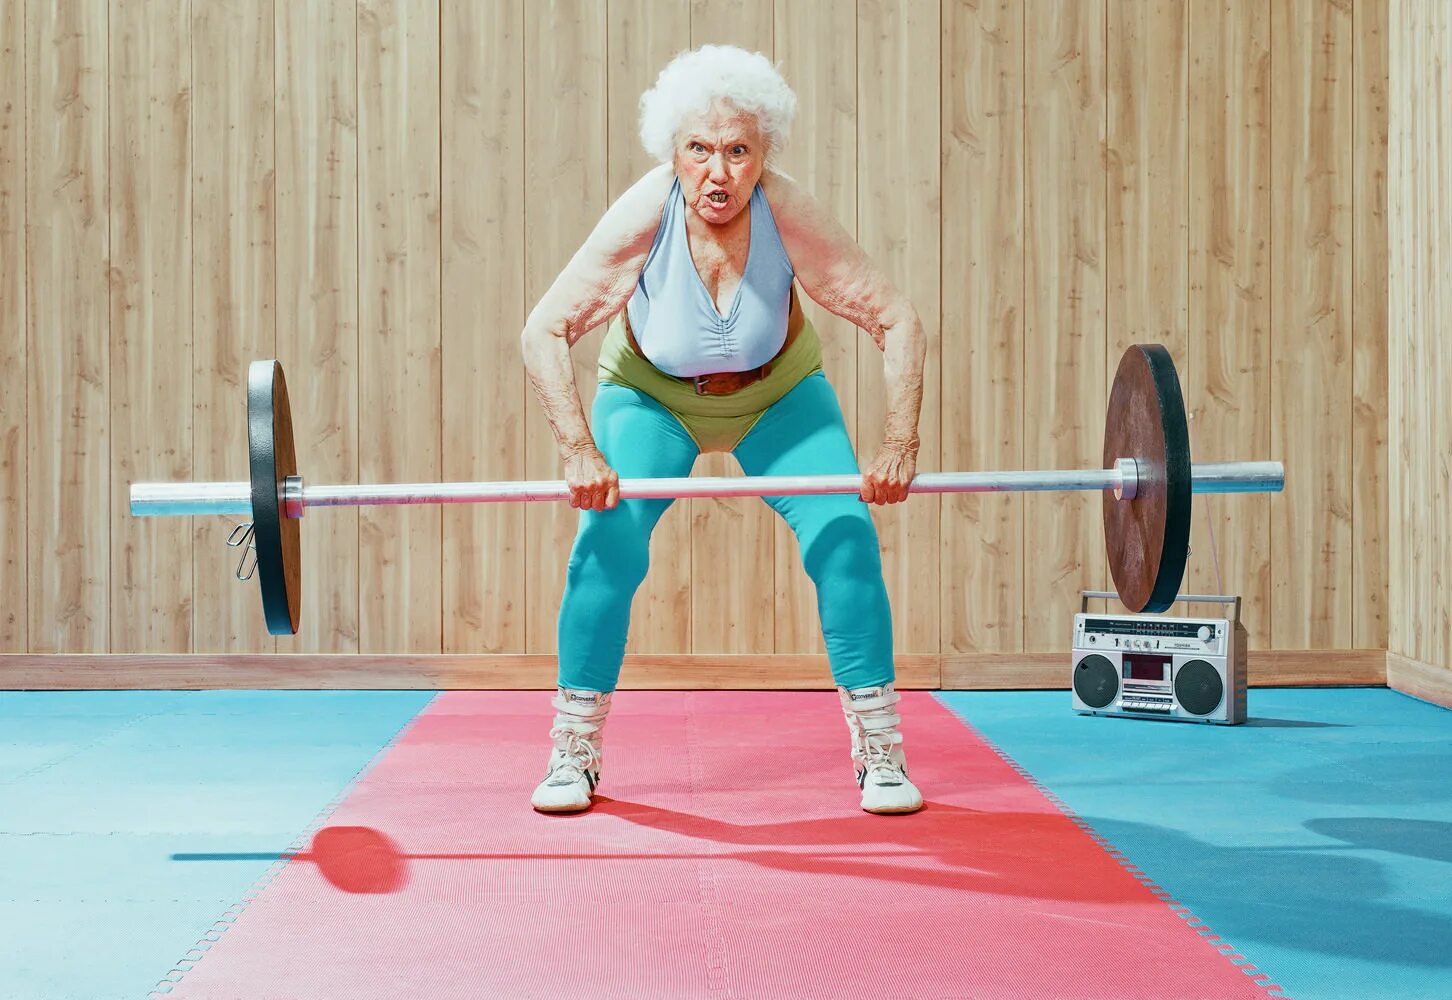 Спортивная бабка. Старушки в тренажерном зале. Бабушка в спортзале. Спортивные пожилые люди.